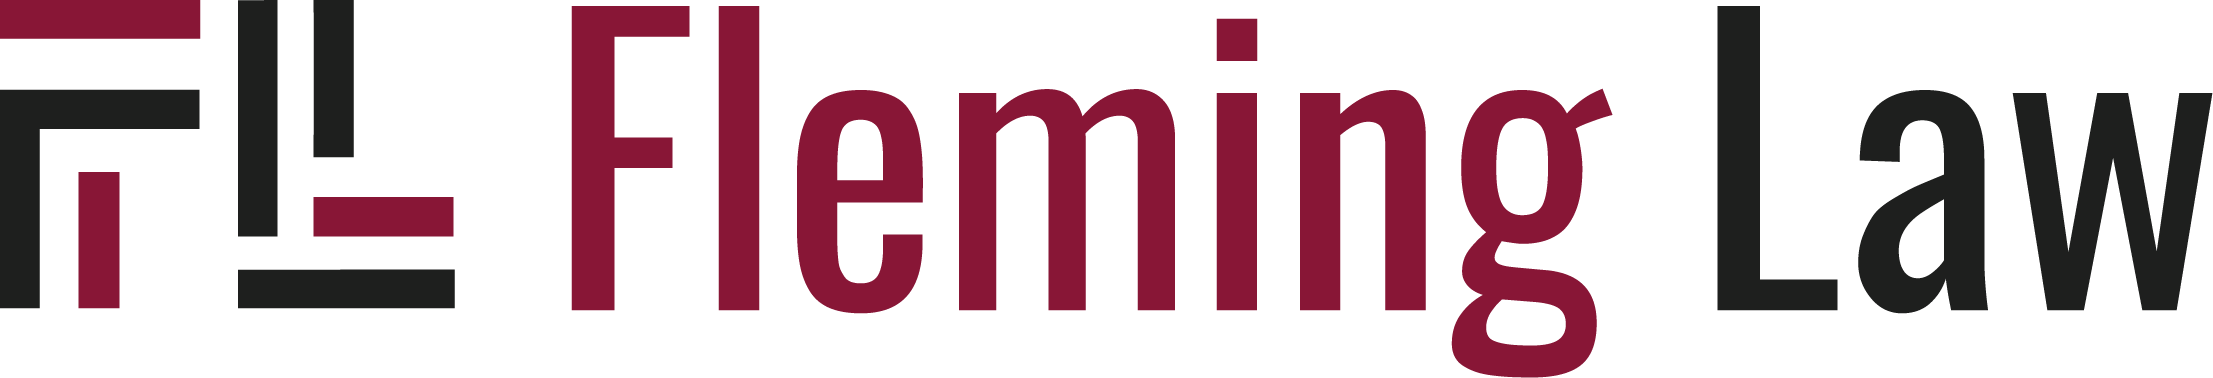 fleming law logo - full color